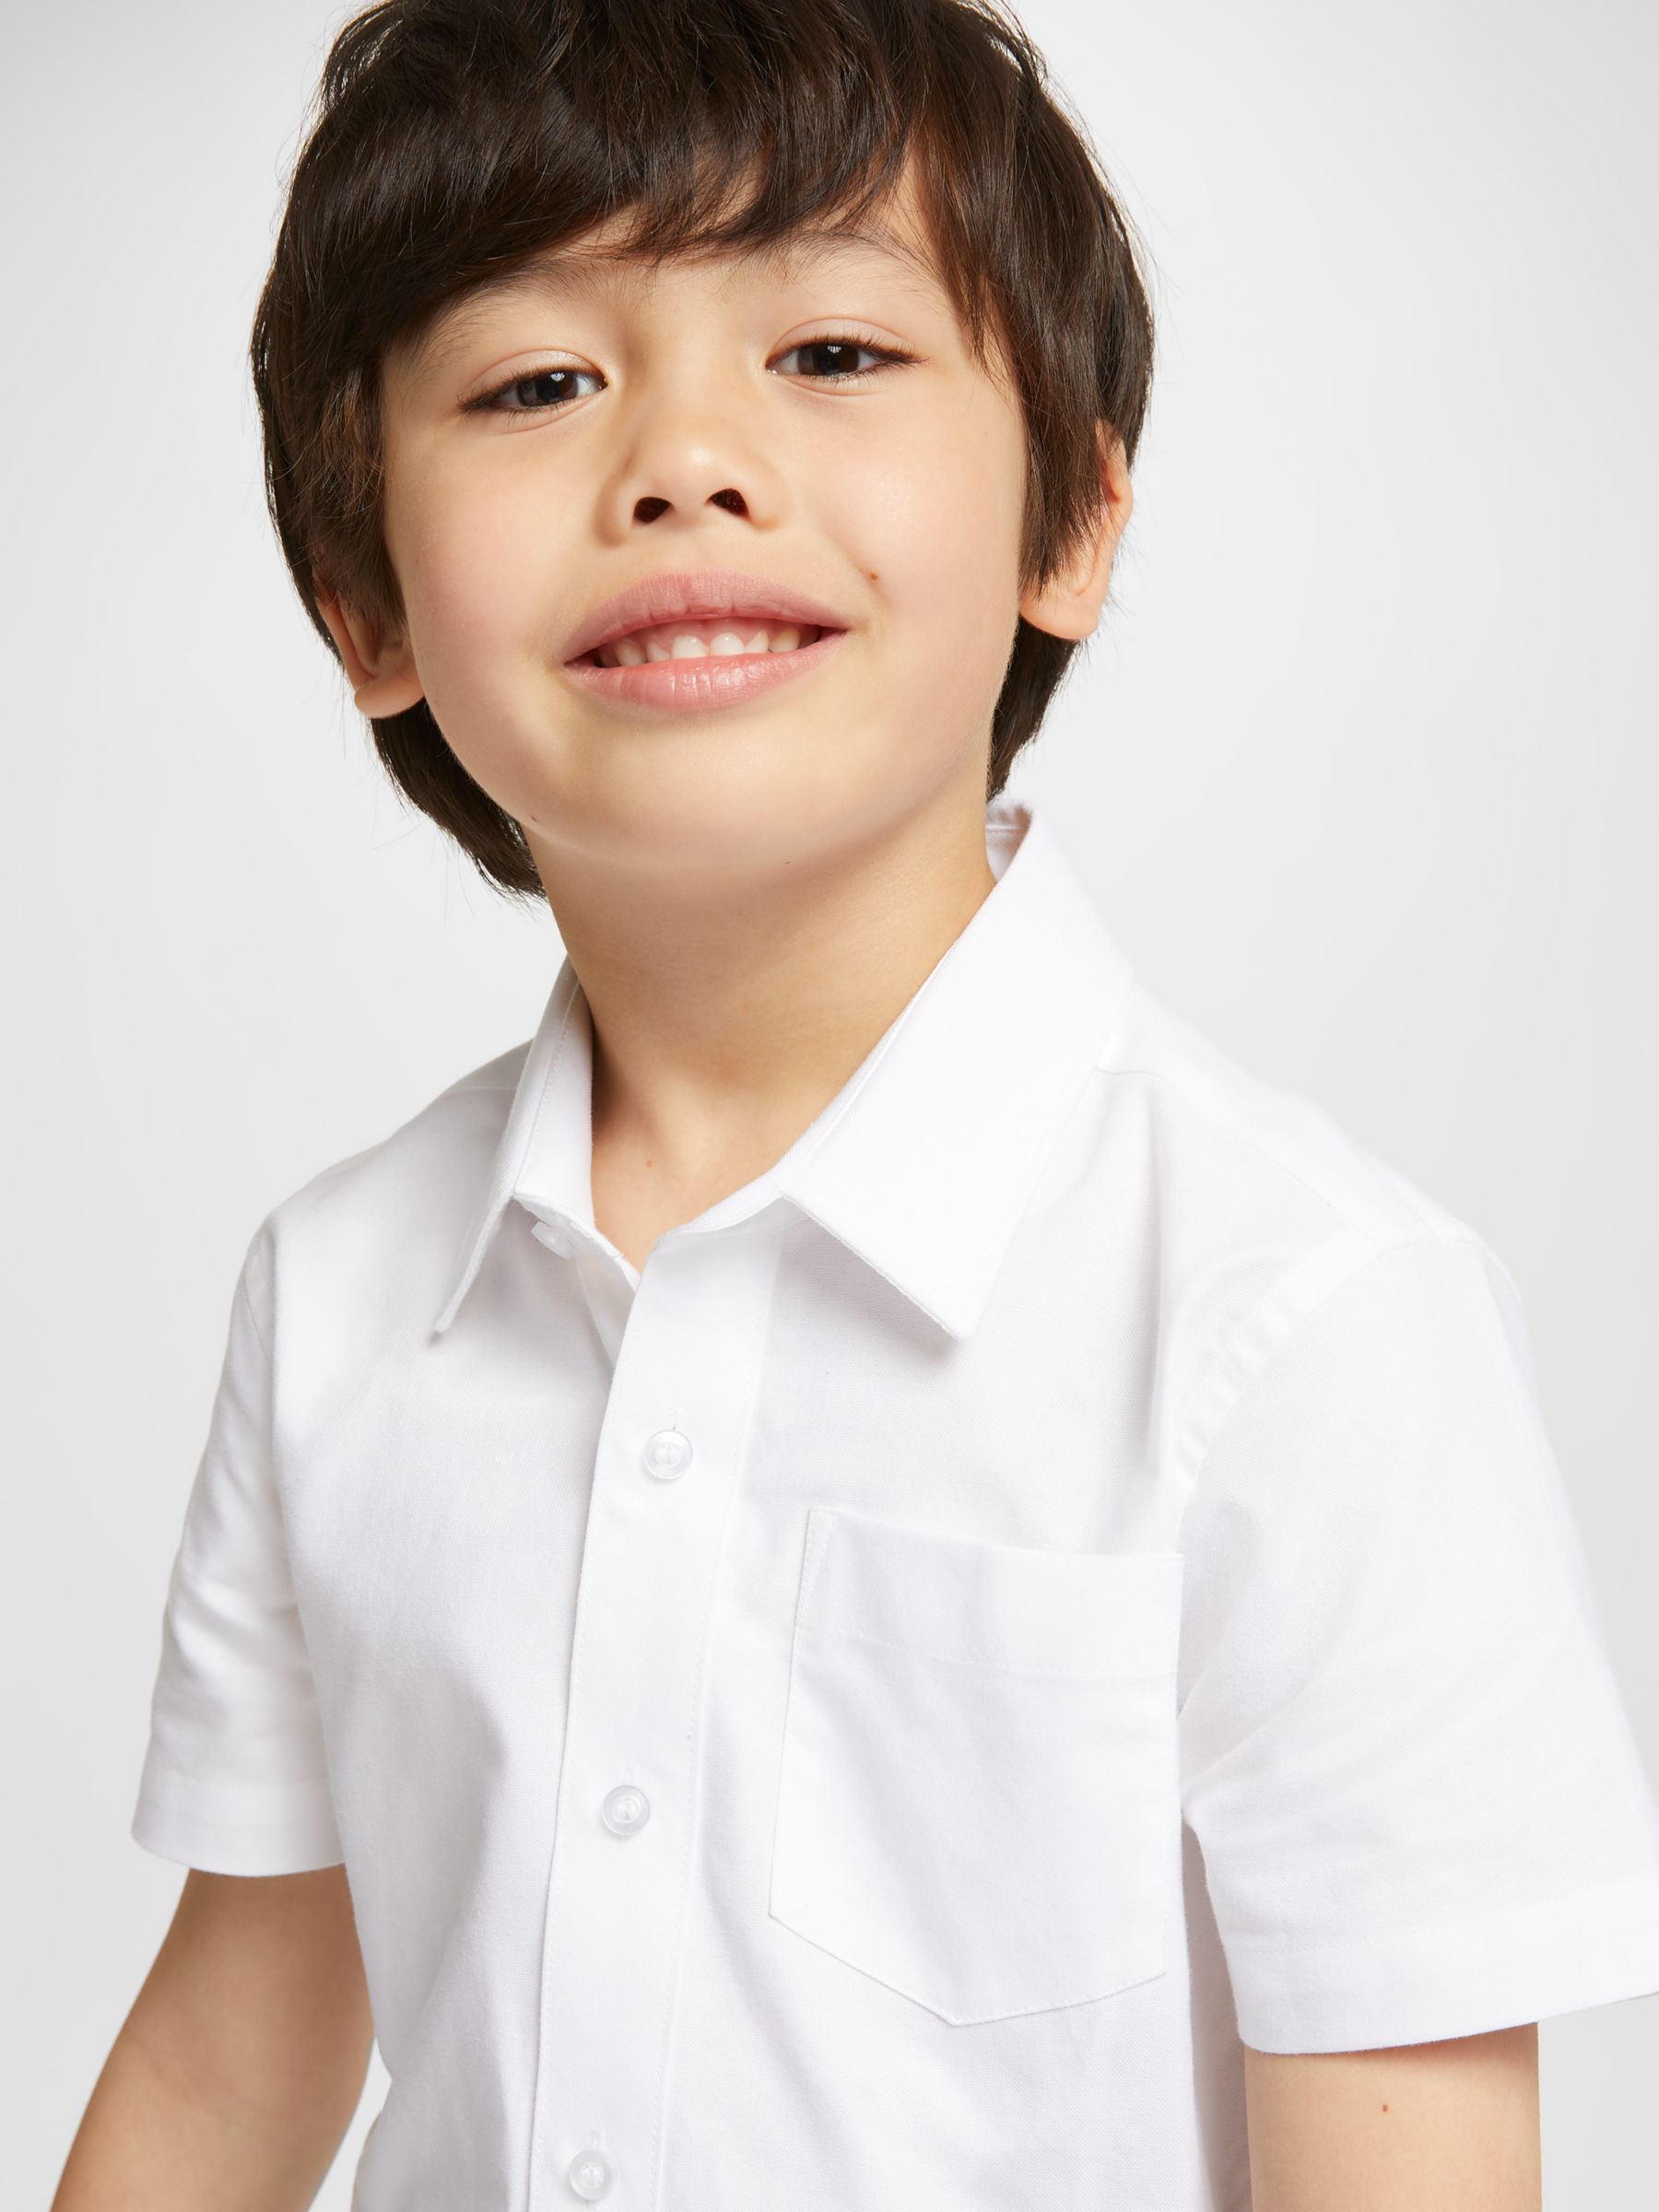 Zeetaq Kids Pack of Two Boy's White Long Sleeved School Shirts UK Size 5-16 Years